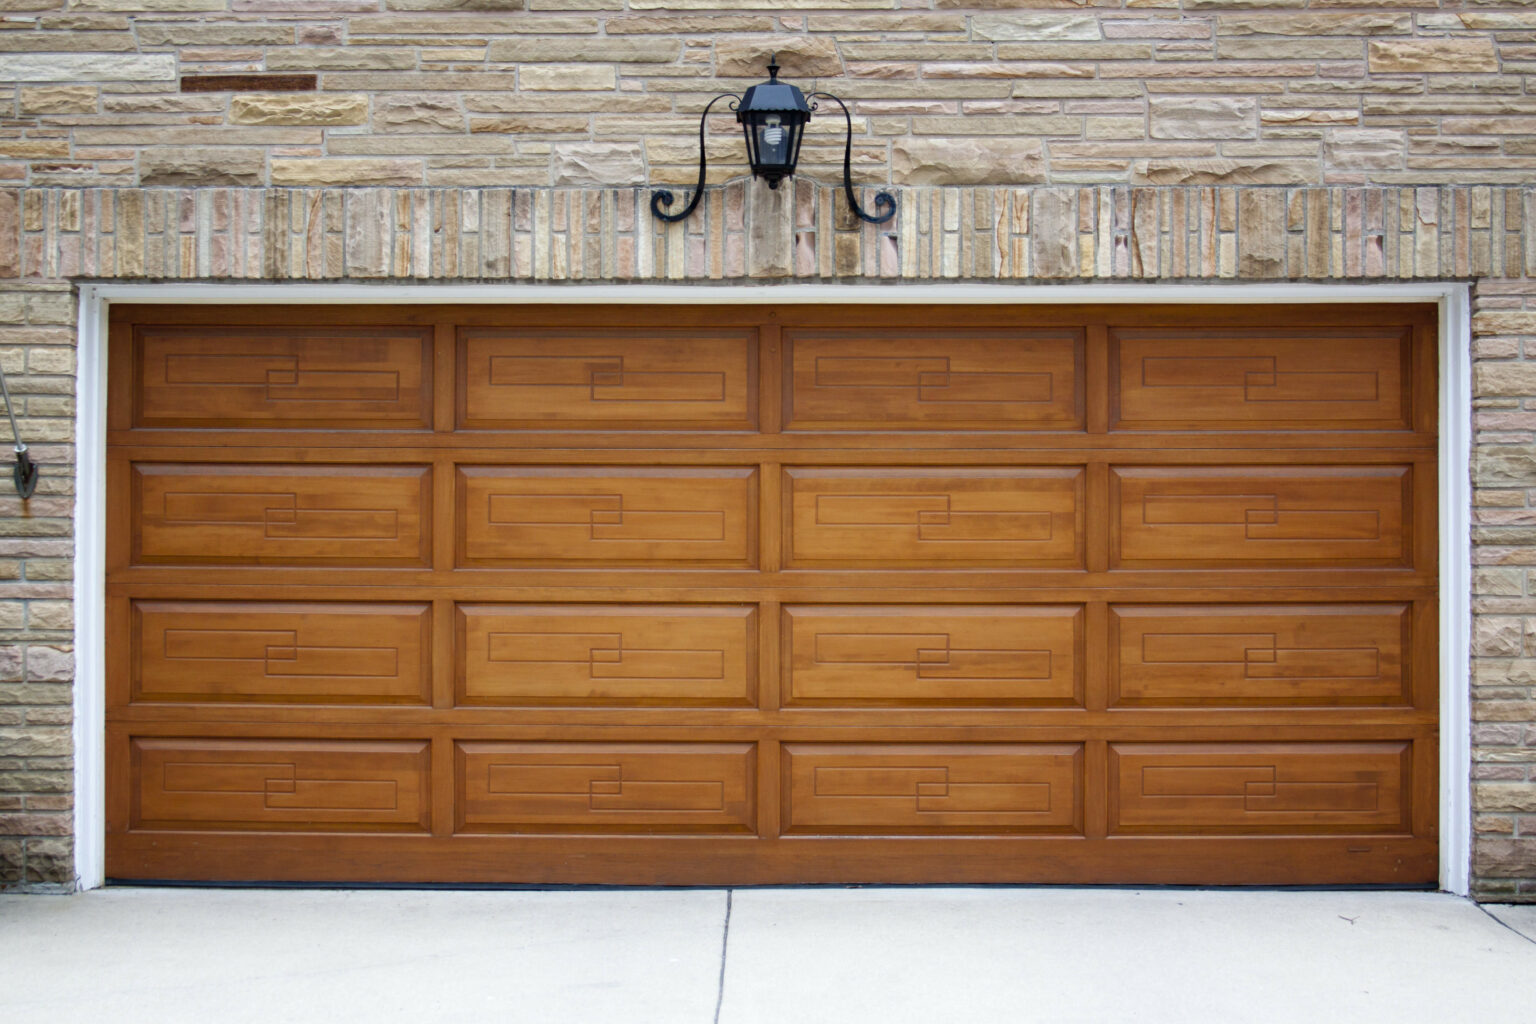 Do I Need an Insulated Garage Door in California?